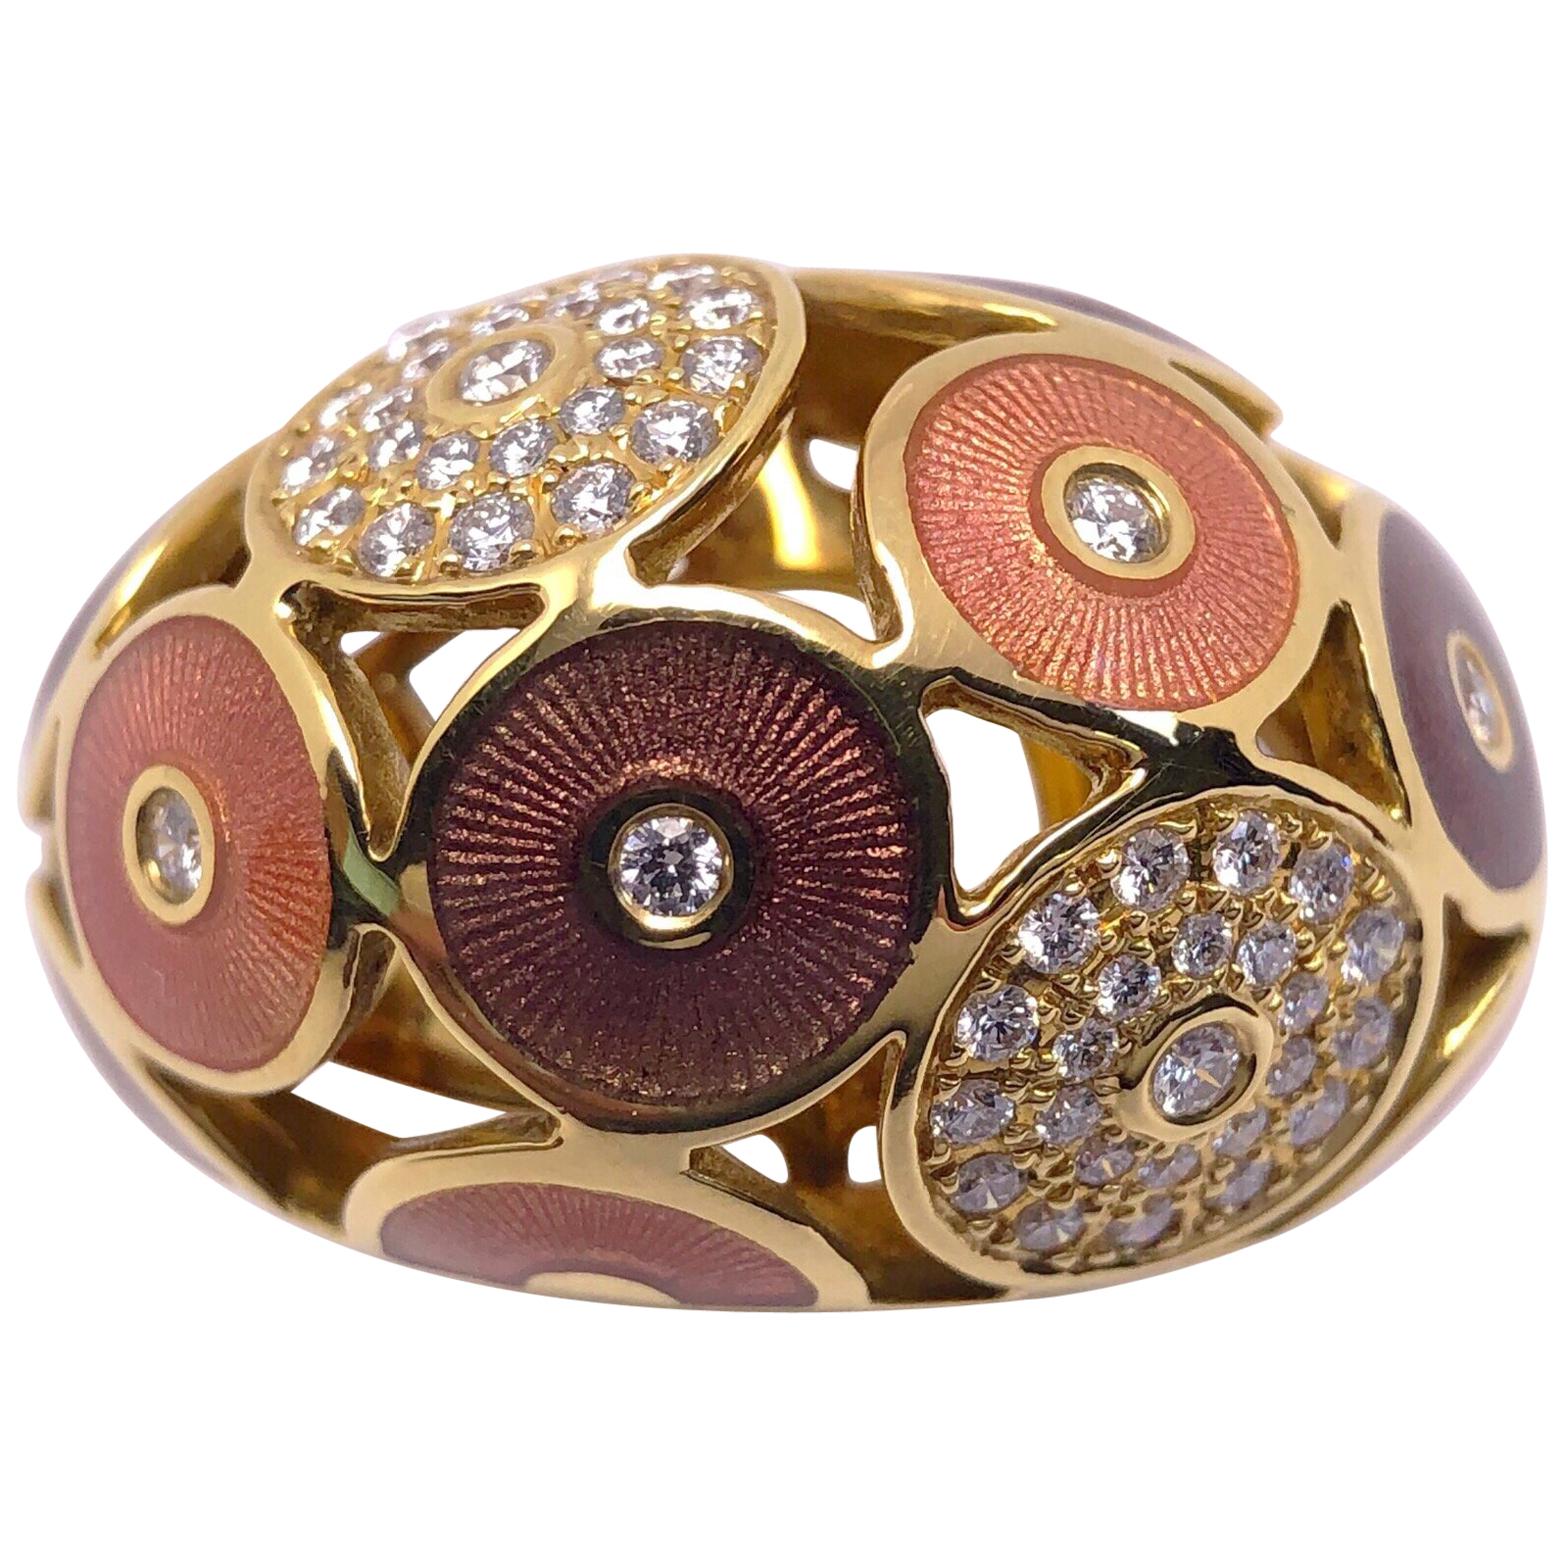 Modern Faberge 18 Karat Yellow Gold, Guilloché Enamel and Diamond Ring